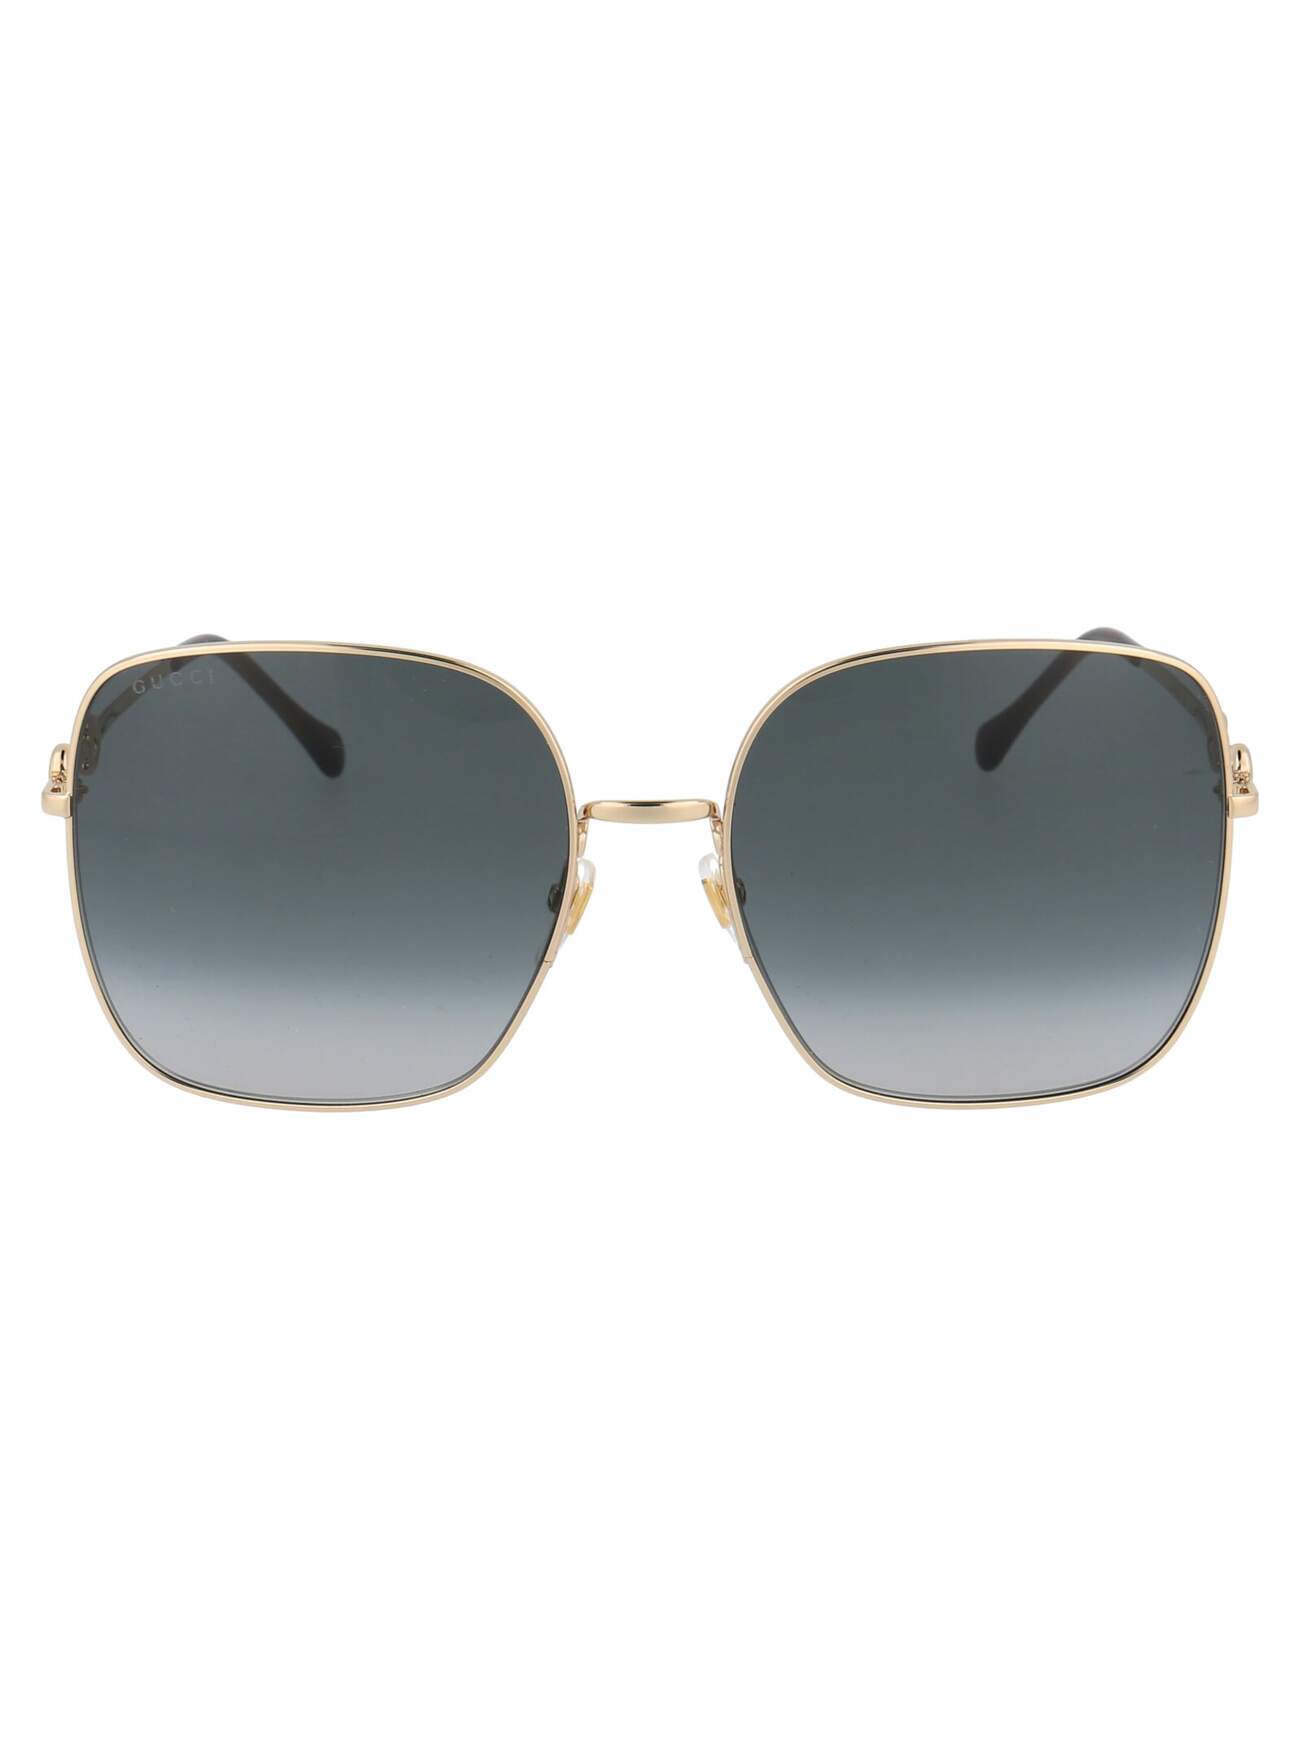 Gucci Eyewear Gg0879s Sunglasses in gold / grey